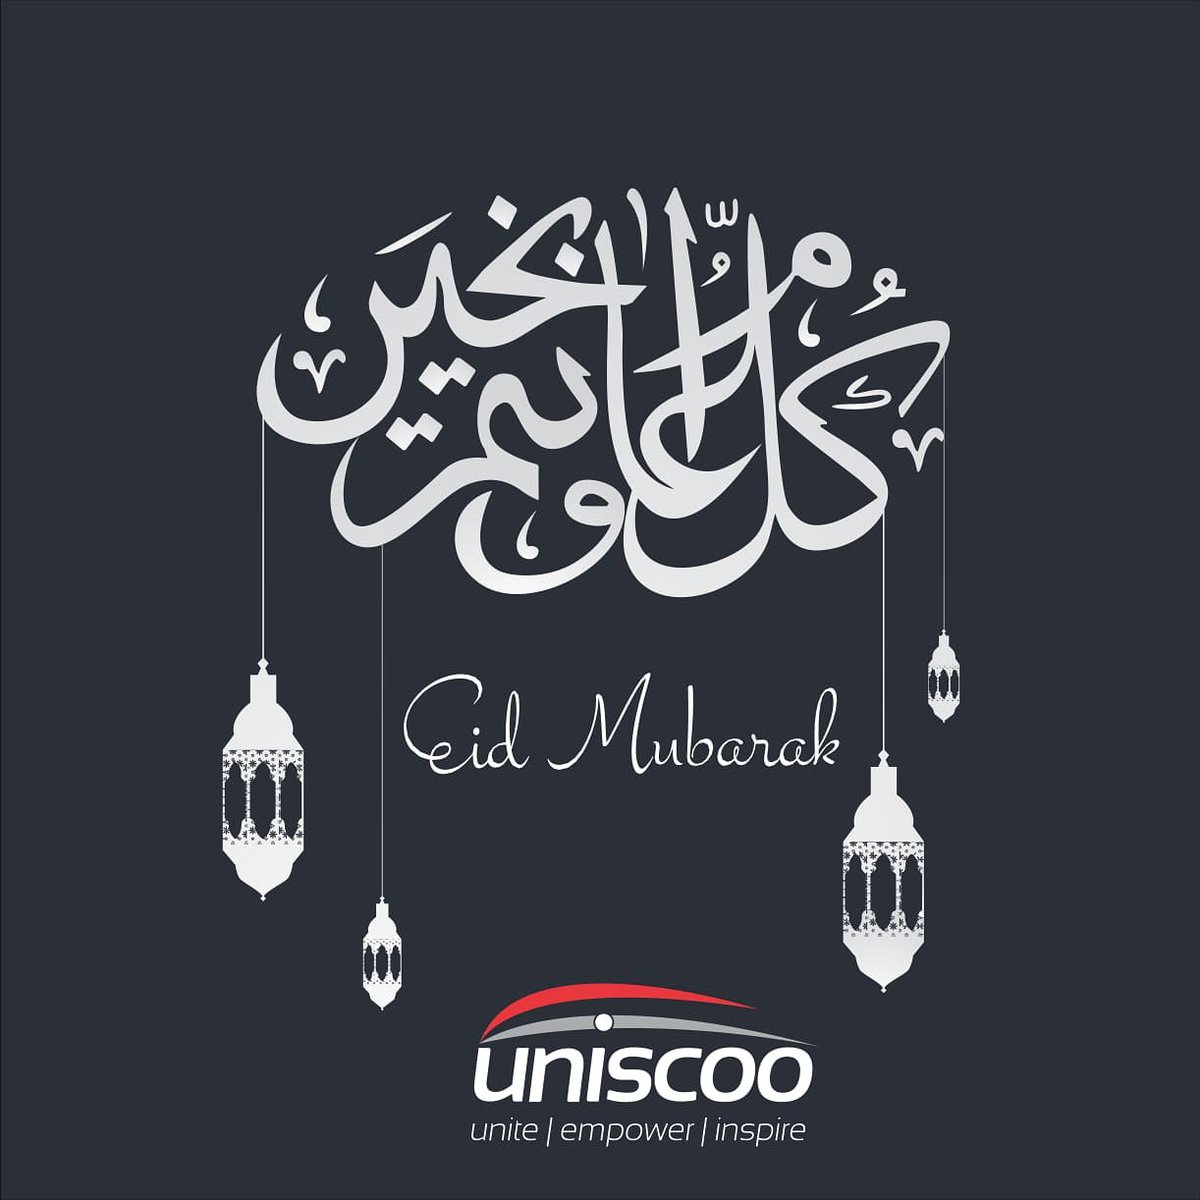 Eid Mubarak ☺☺☺ #uniscoo #Eidmubarak #tastiertogether #matiangi #joycelaboso